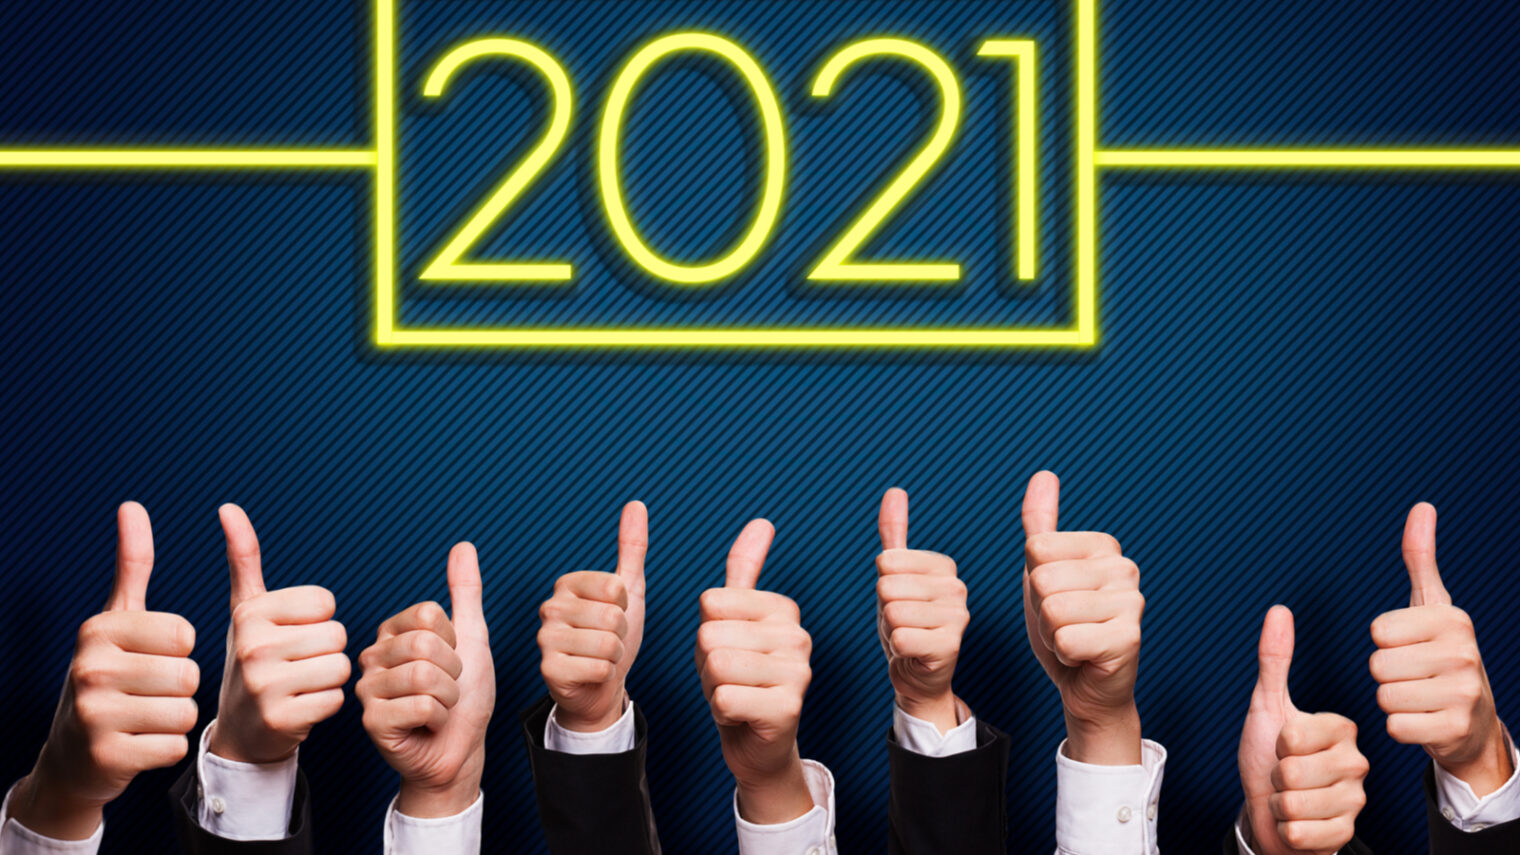 Hey, 2021 wasn't all bad! Image via Shutterstock